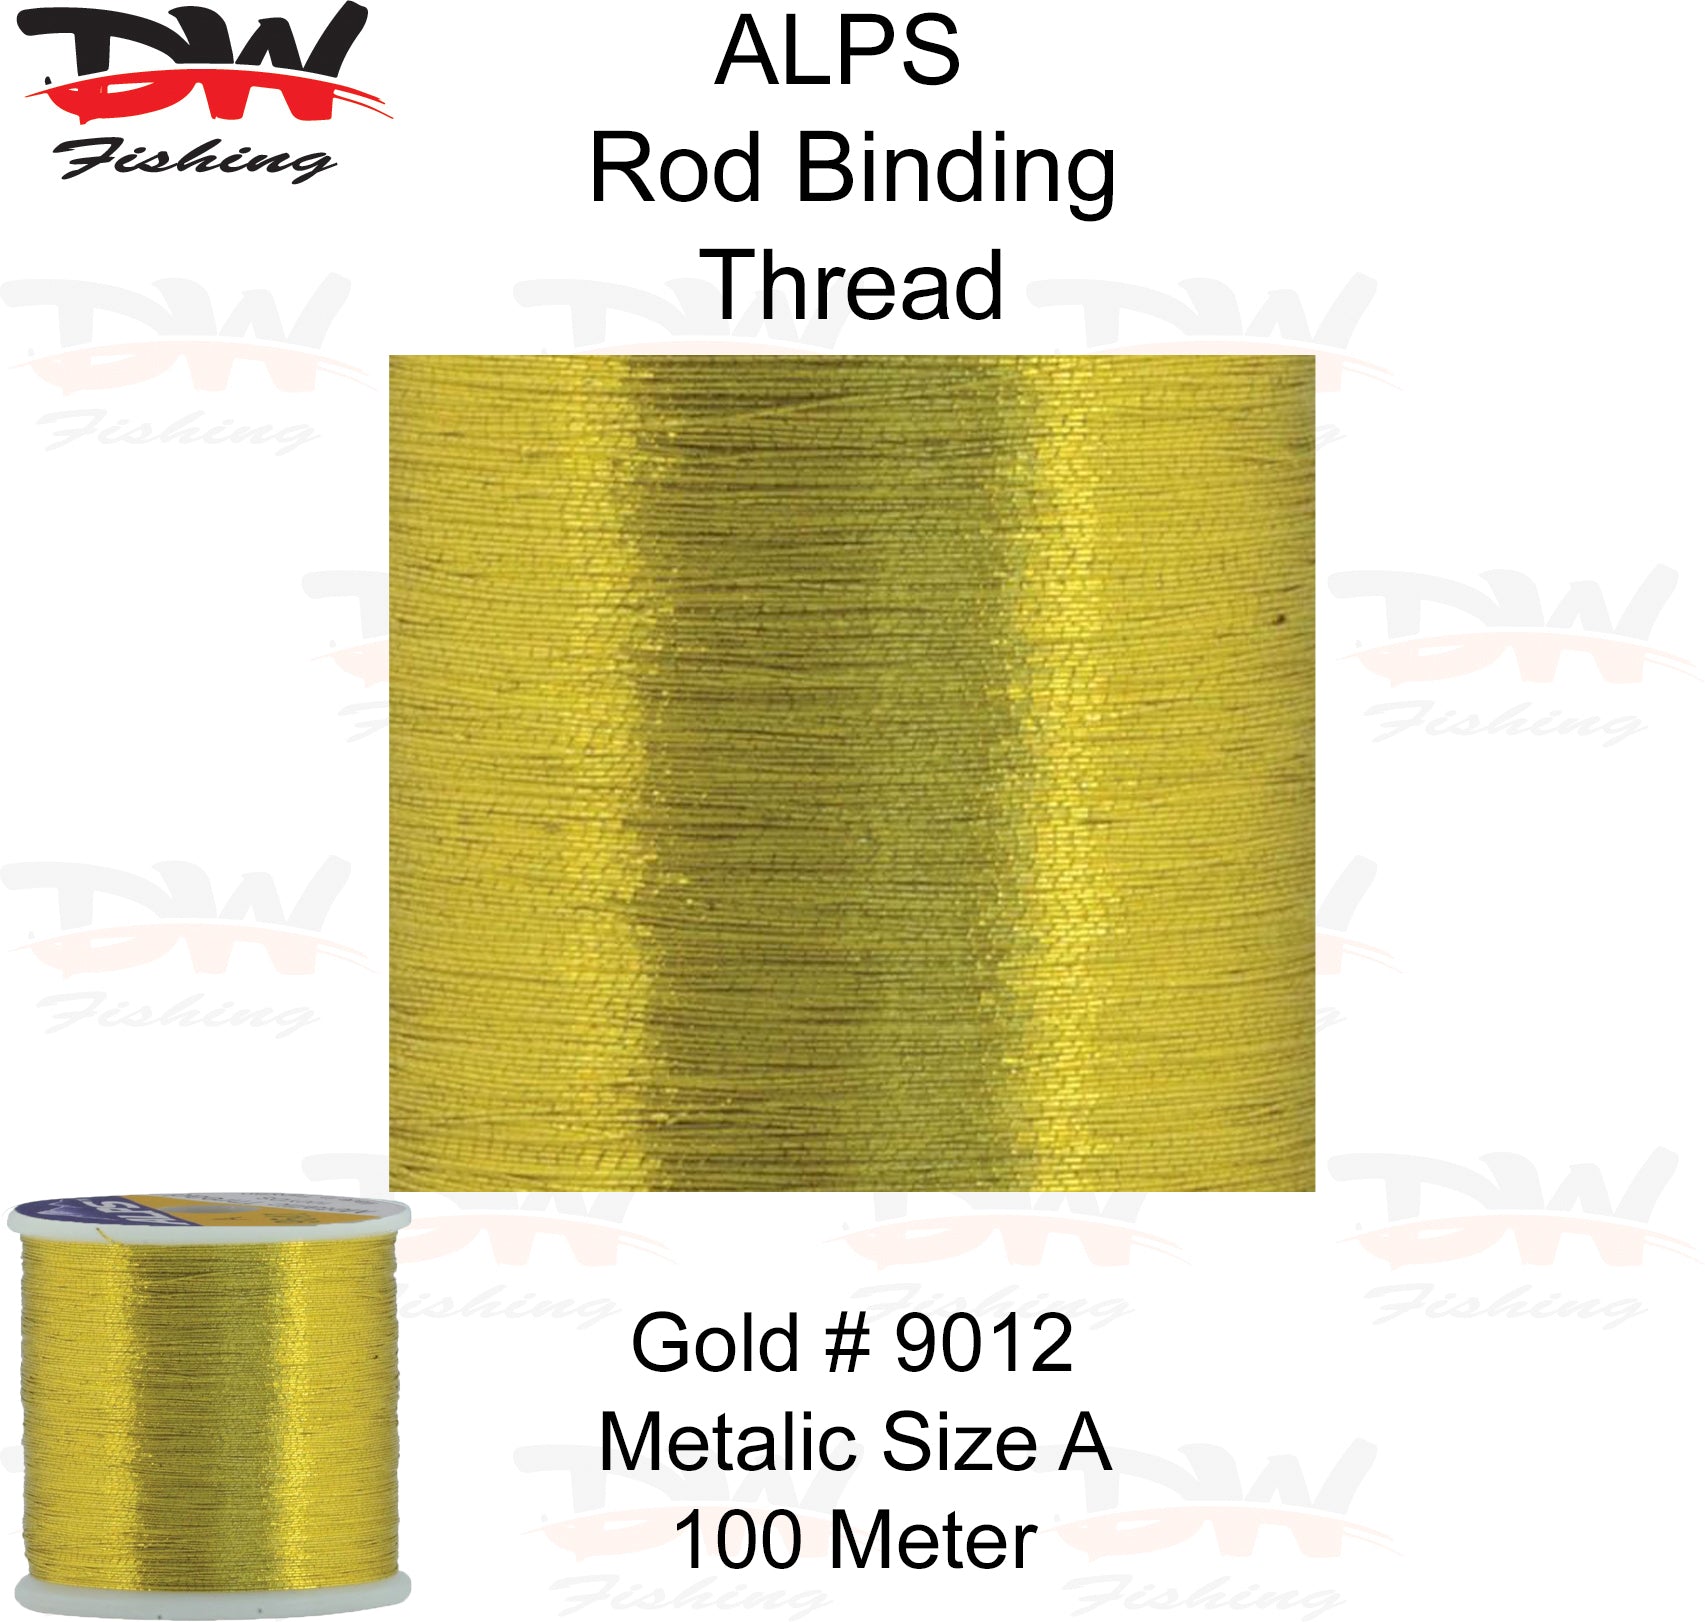 ALPS metalic rod binding thread Gold